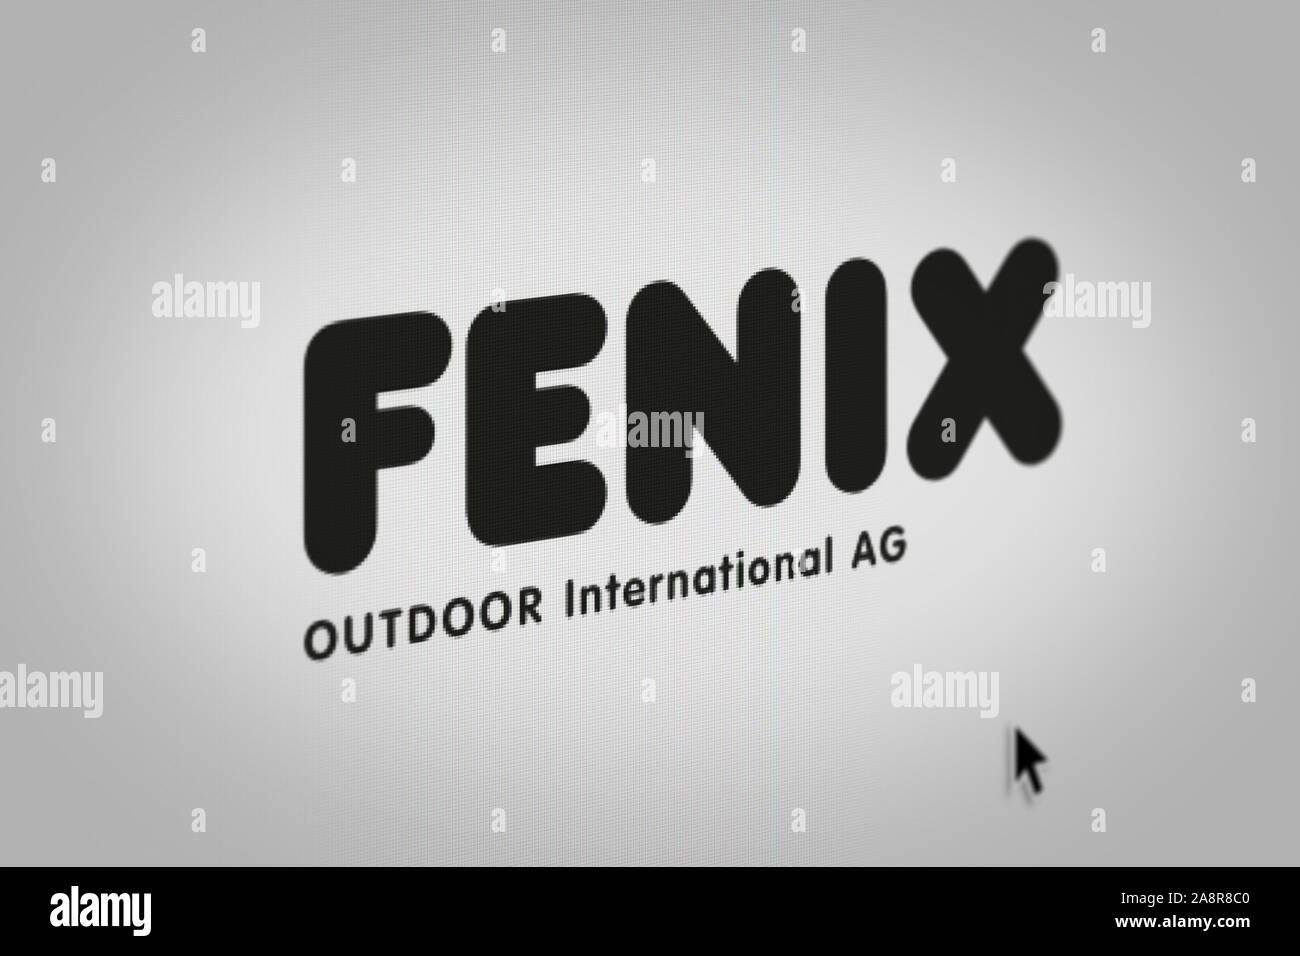 Fenix outdoor international